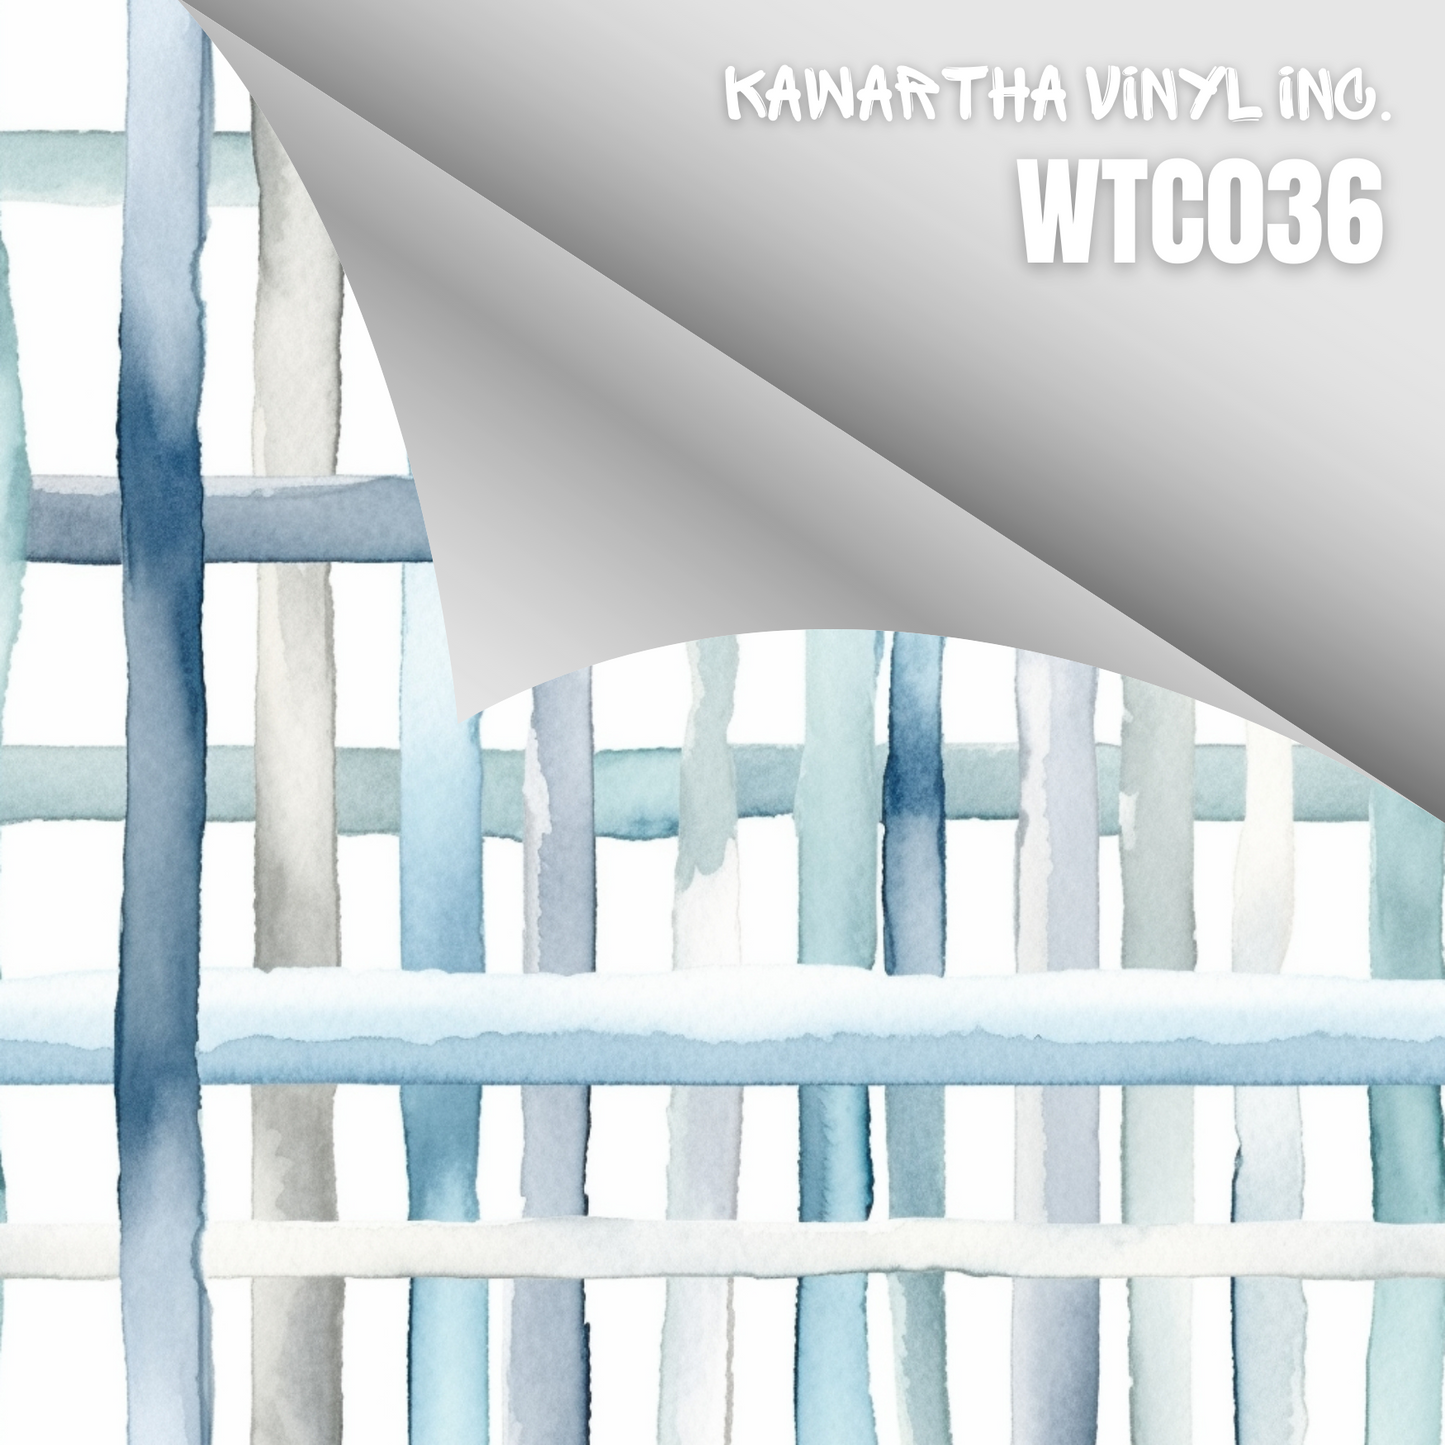 WTC036 Adhesive & HTV Patterns